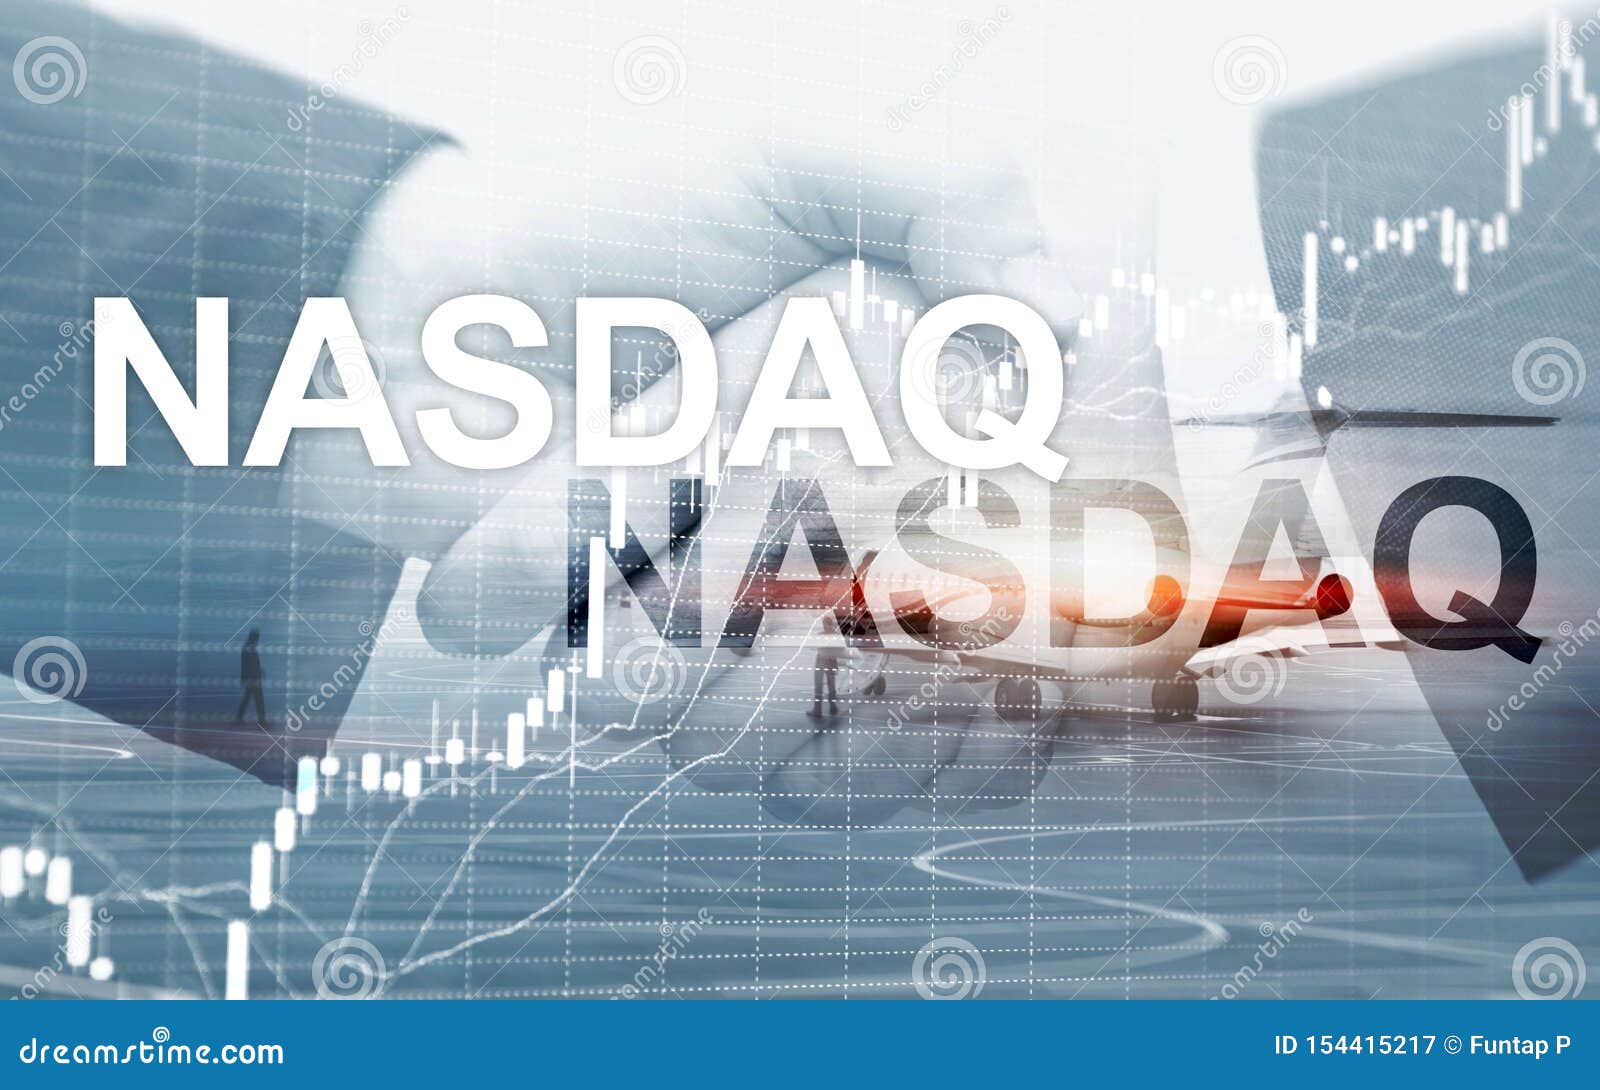 national association of securities dealers automated quotation. nasdaq.